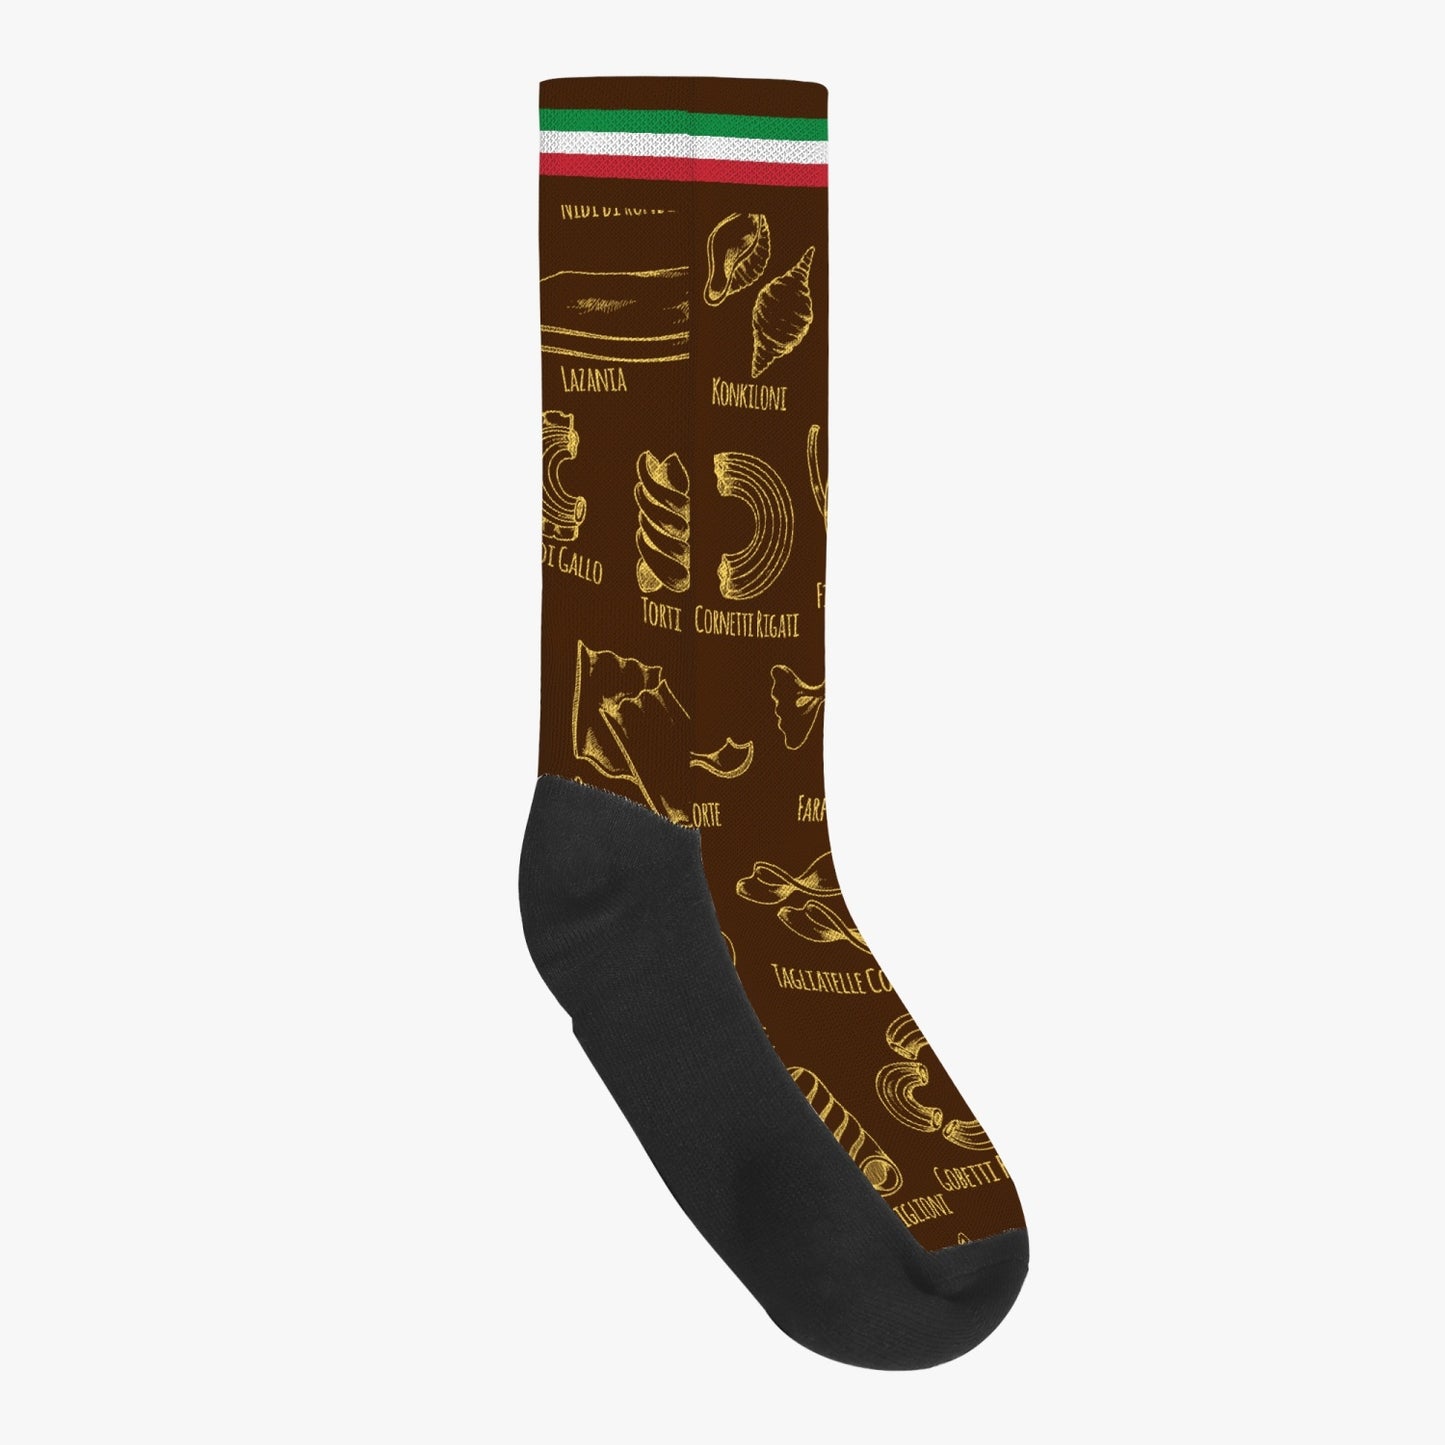 Socks Italian pasta